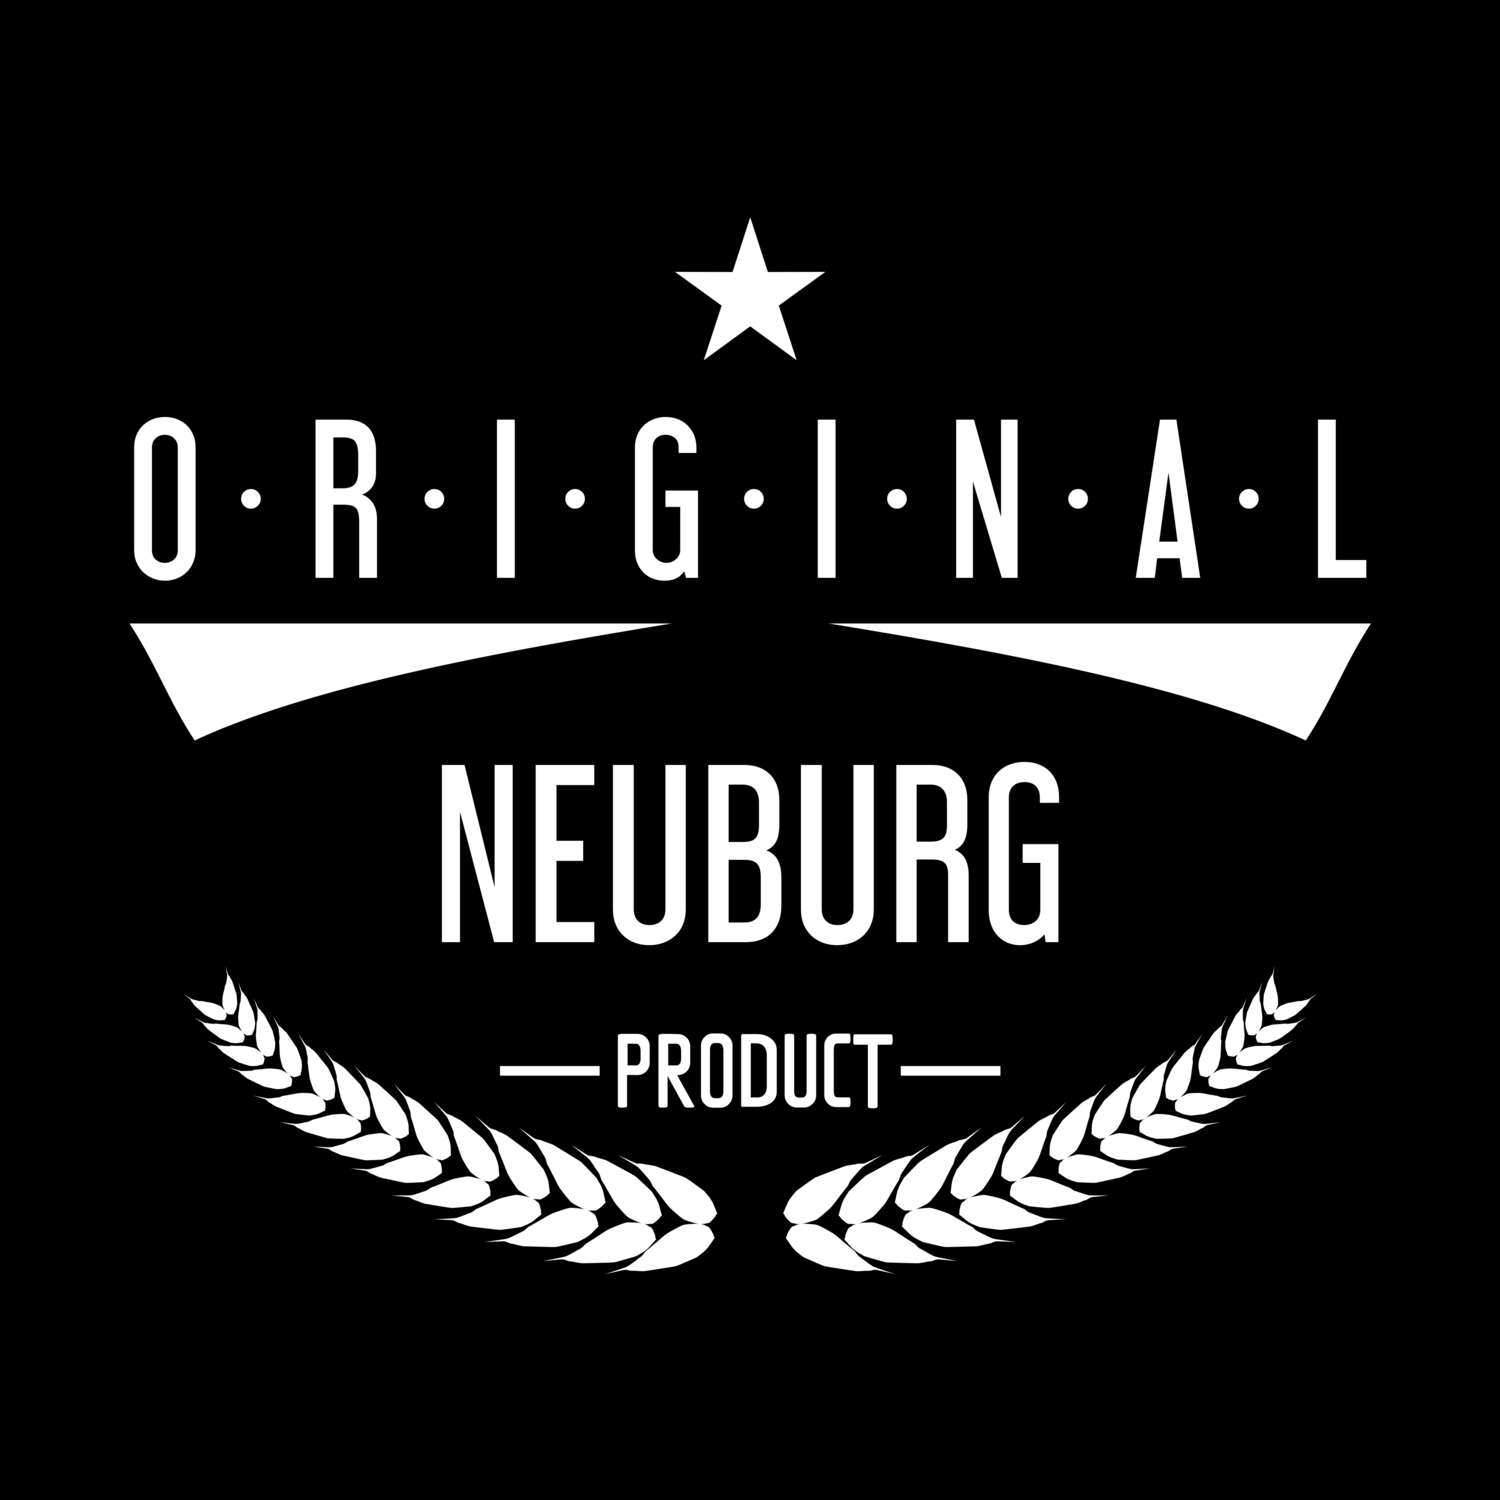 Neuburg T-Shirt »Original Product«